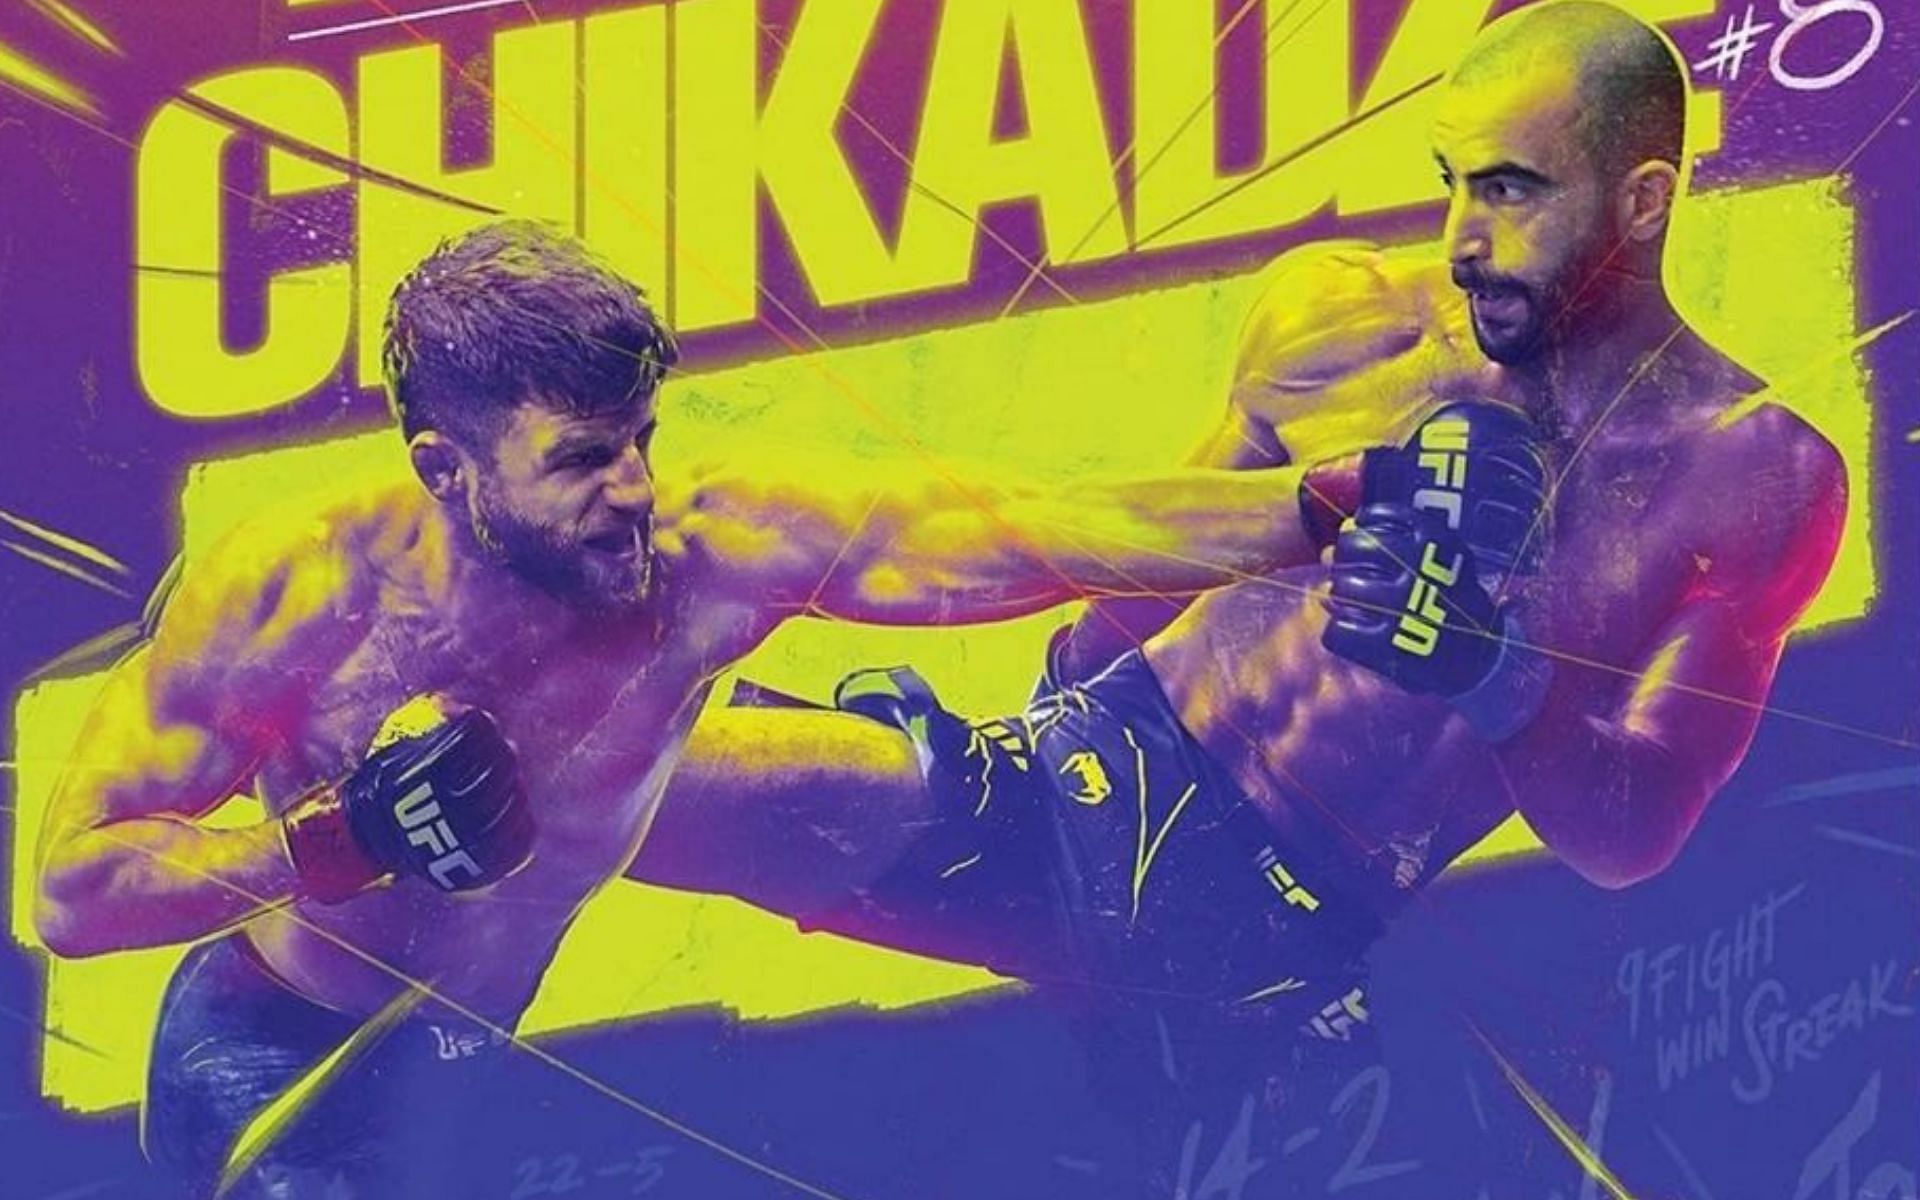 Calvin Kattar vs. Giga Chikadze poster via Instagram @knockoutcancer